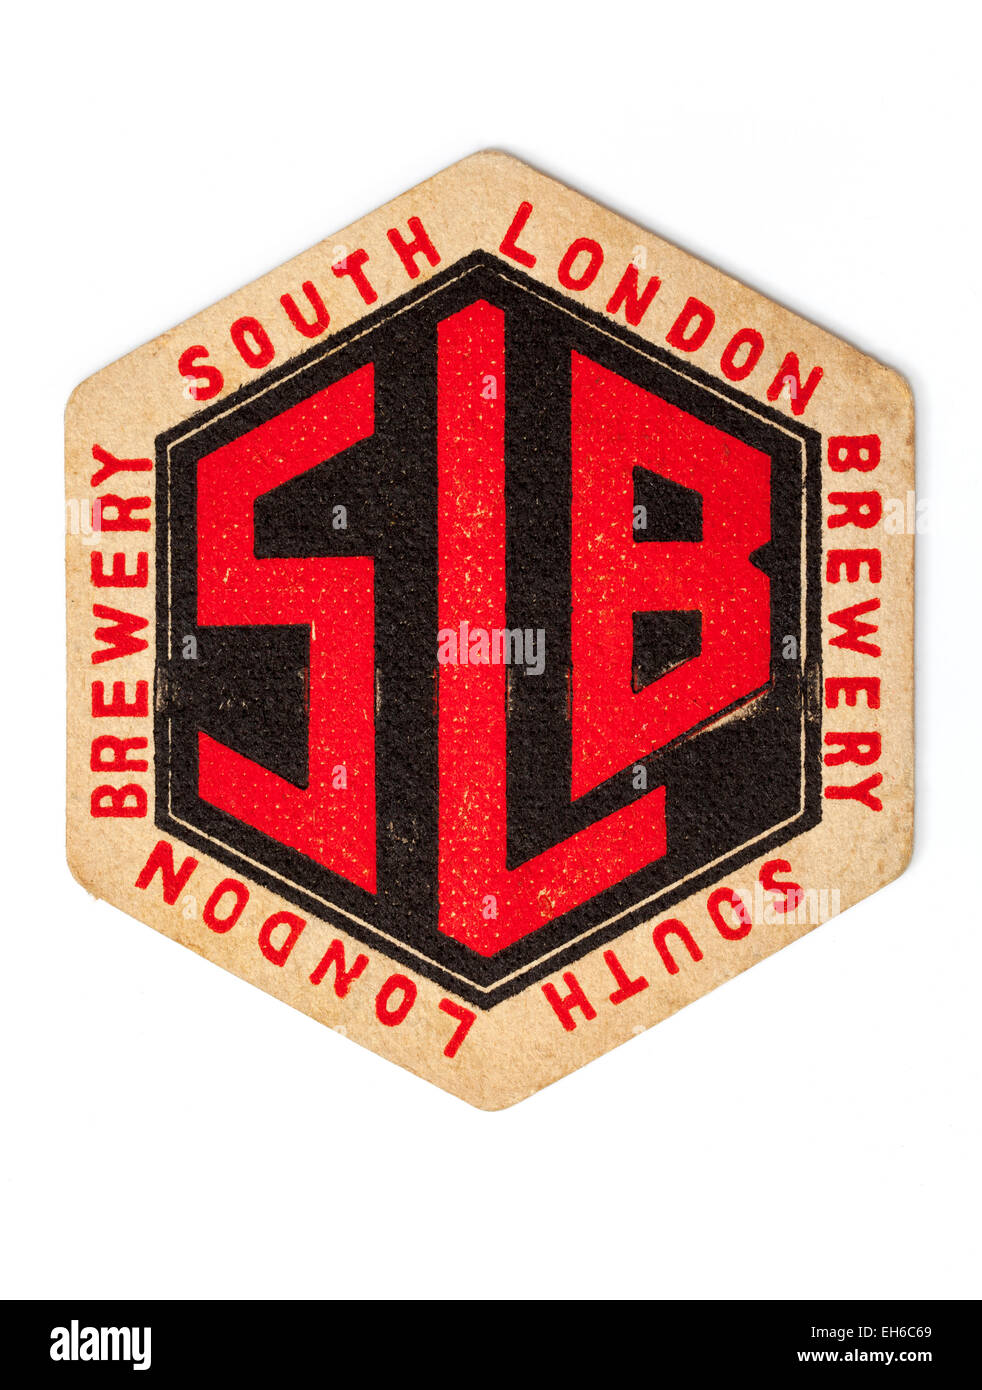 Vintage British pubblicità Beermat South London Brewery Foto Stock